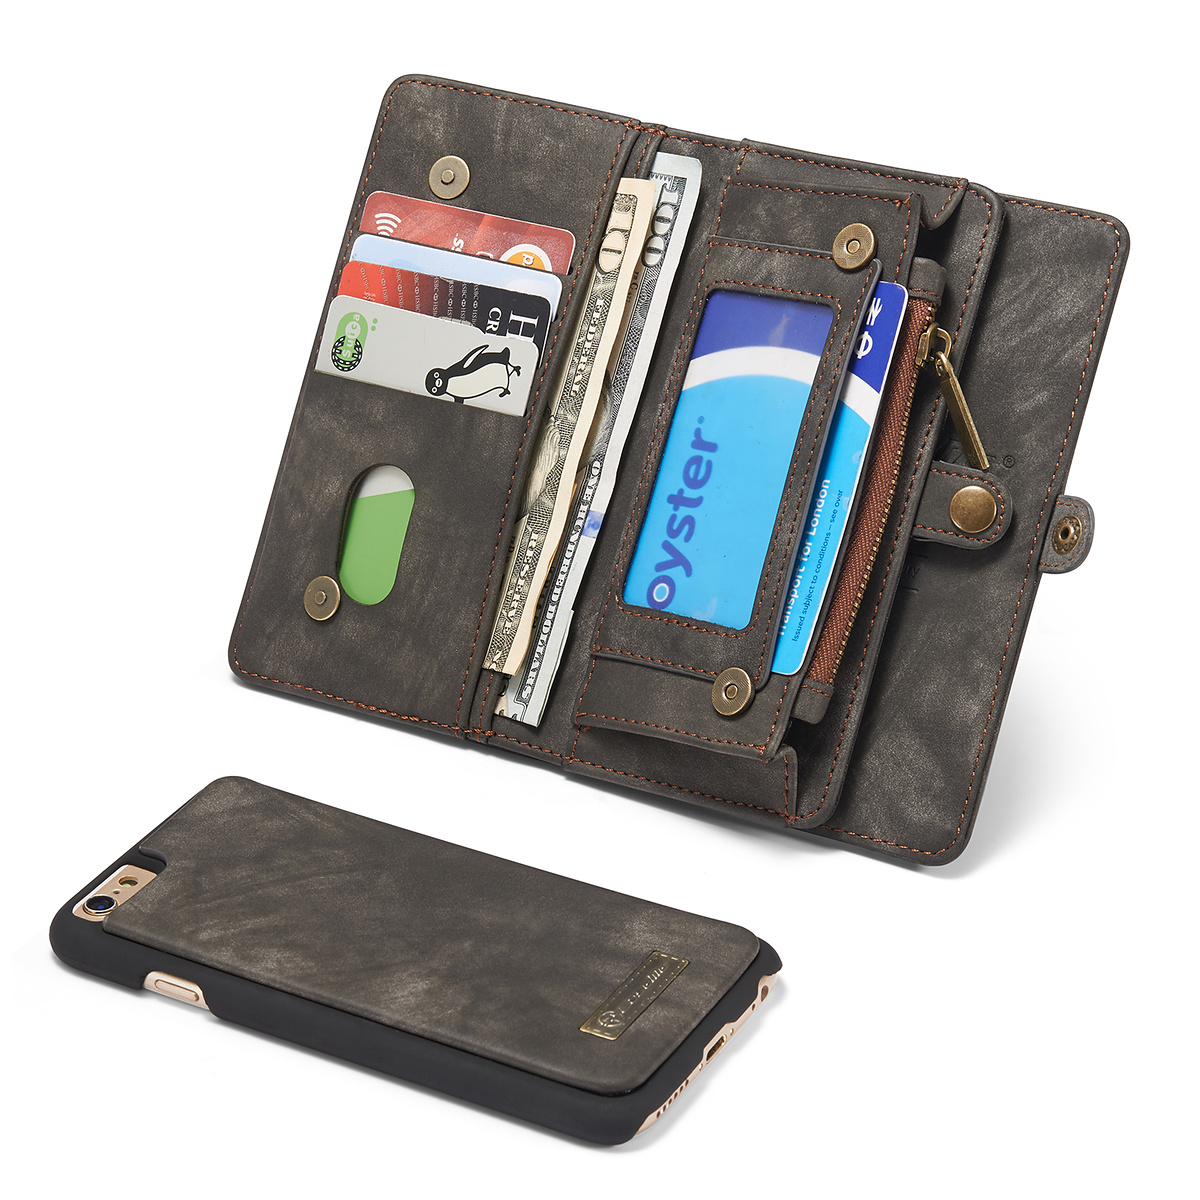 CaseMe plånboksfodral med magnetskal till iPhone 6/6S, svart